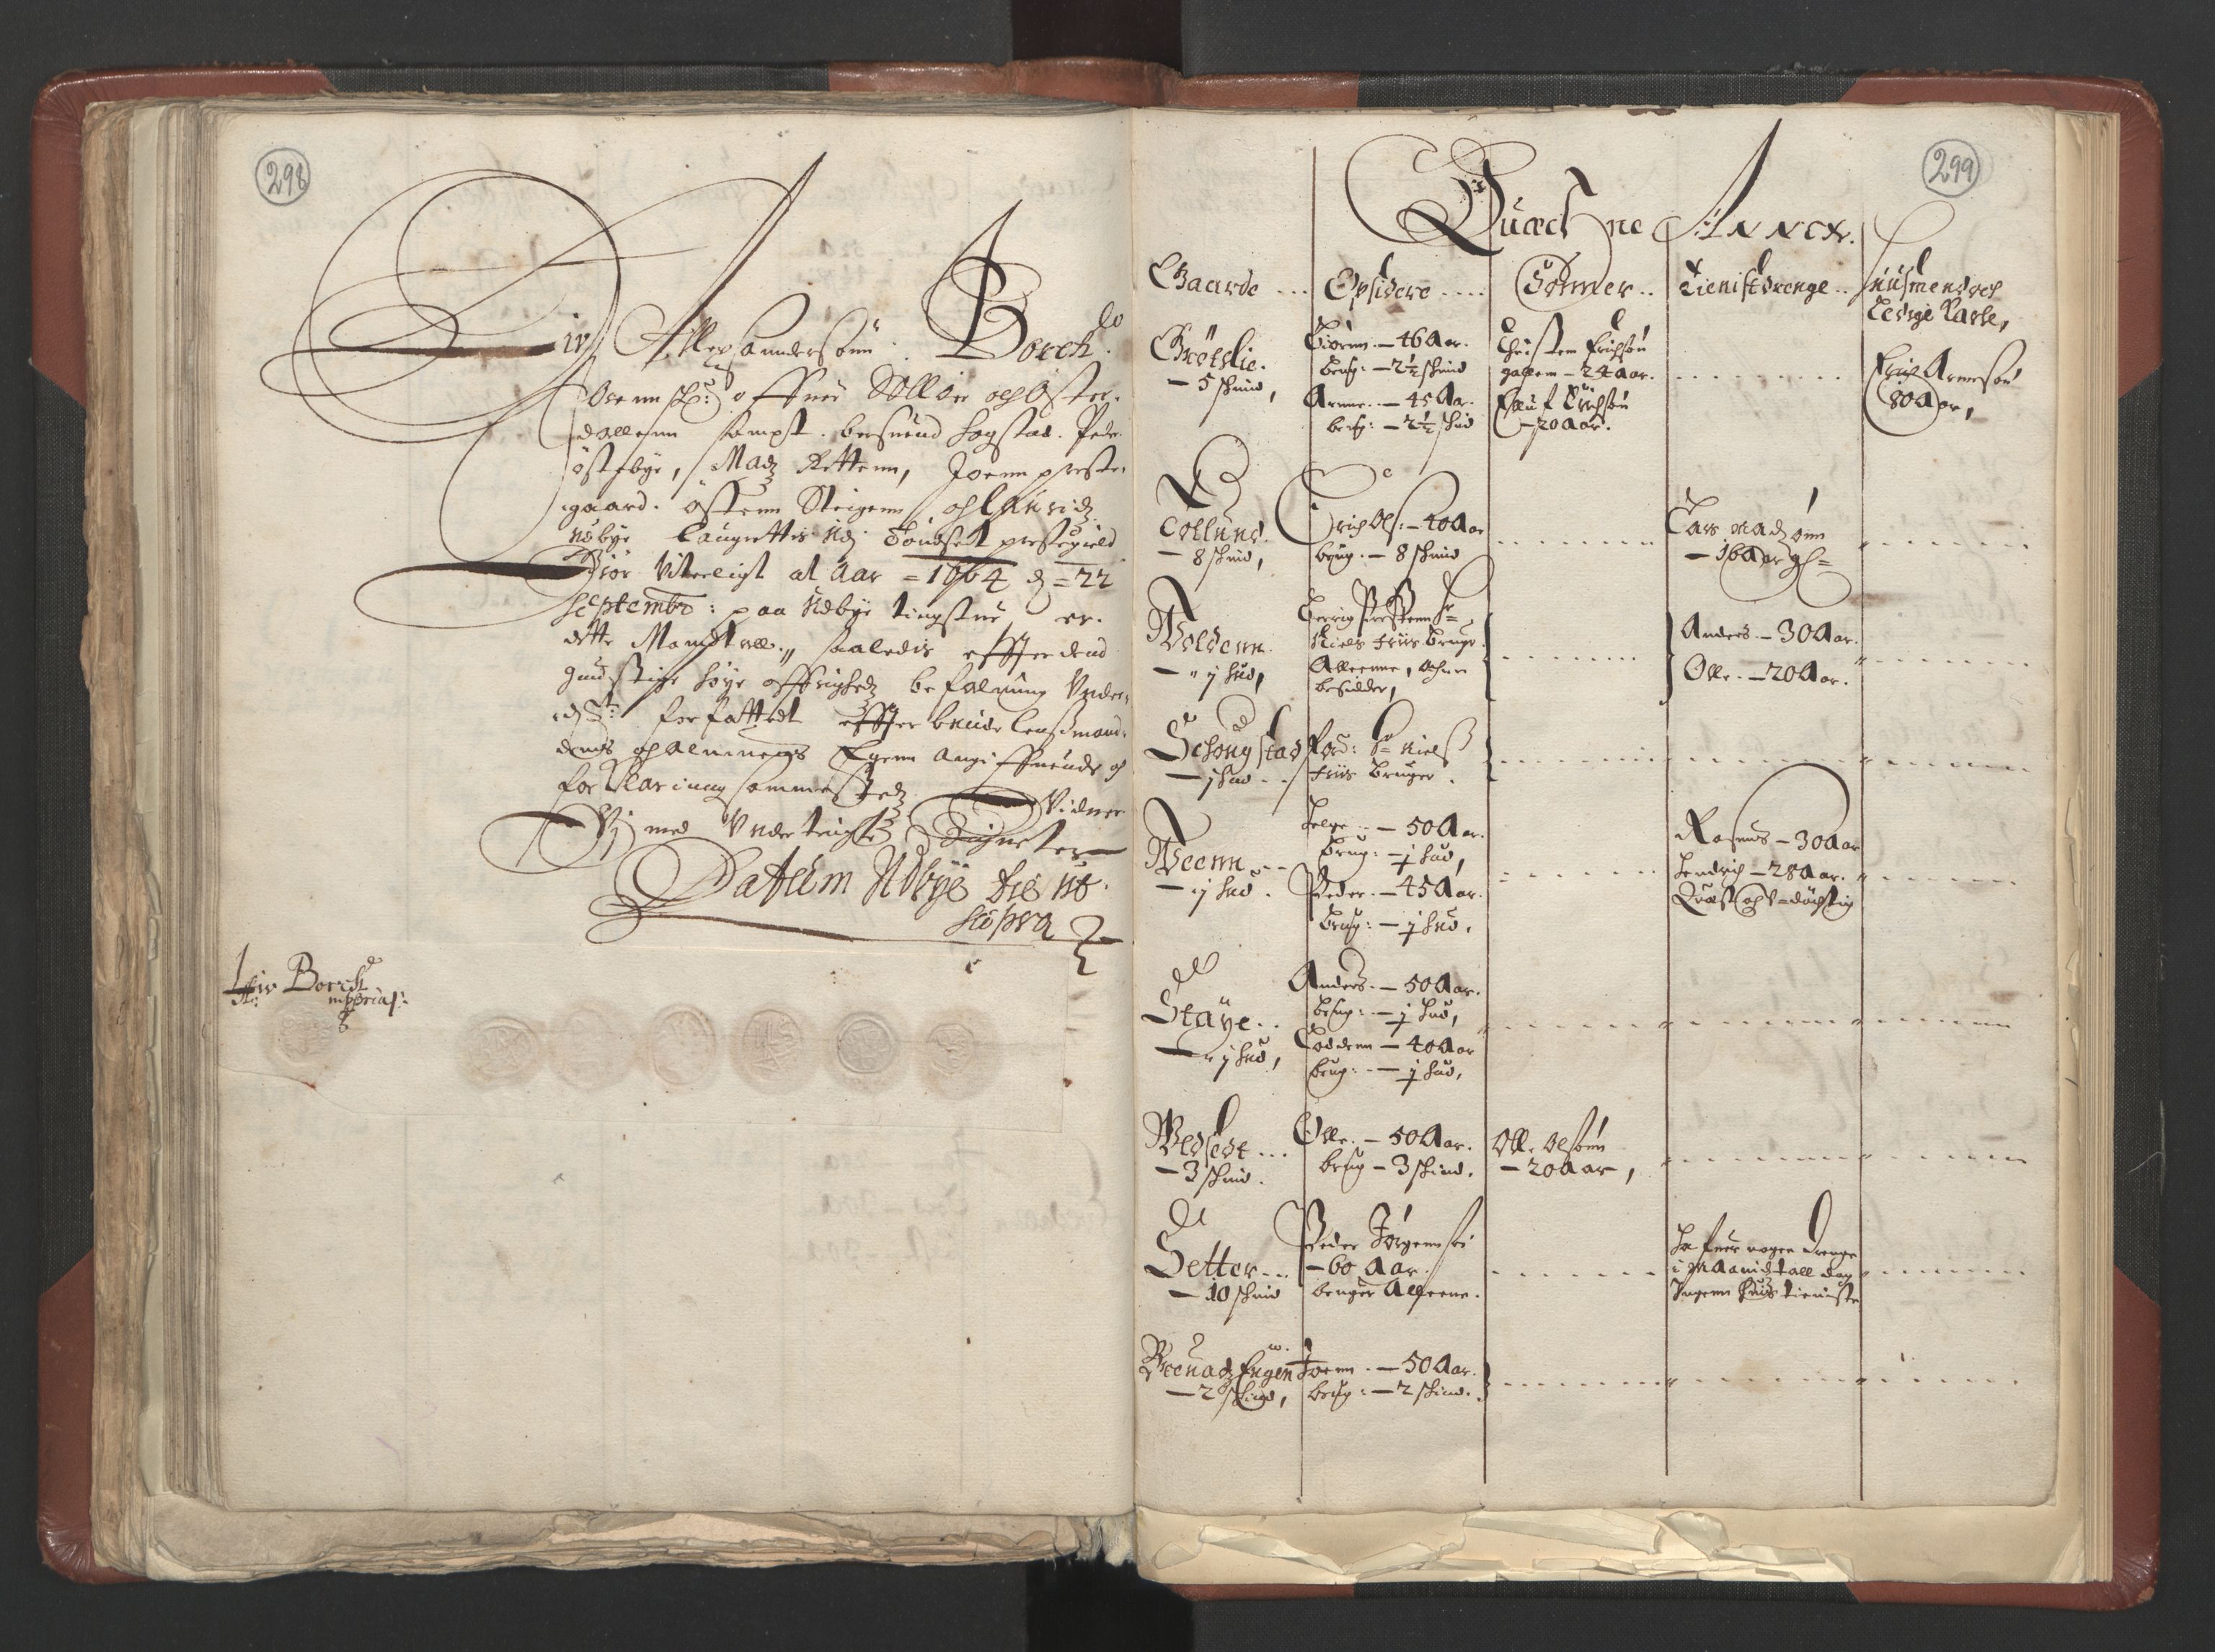 RA, Fogdenes og sorenskrivernes manntall 1664-1666, nr. 3: Hedmark fogderi og Solør, Østerdal og Odal fogderi, 1664, s. 298-299